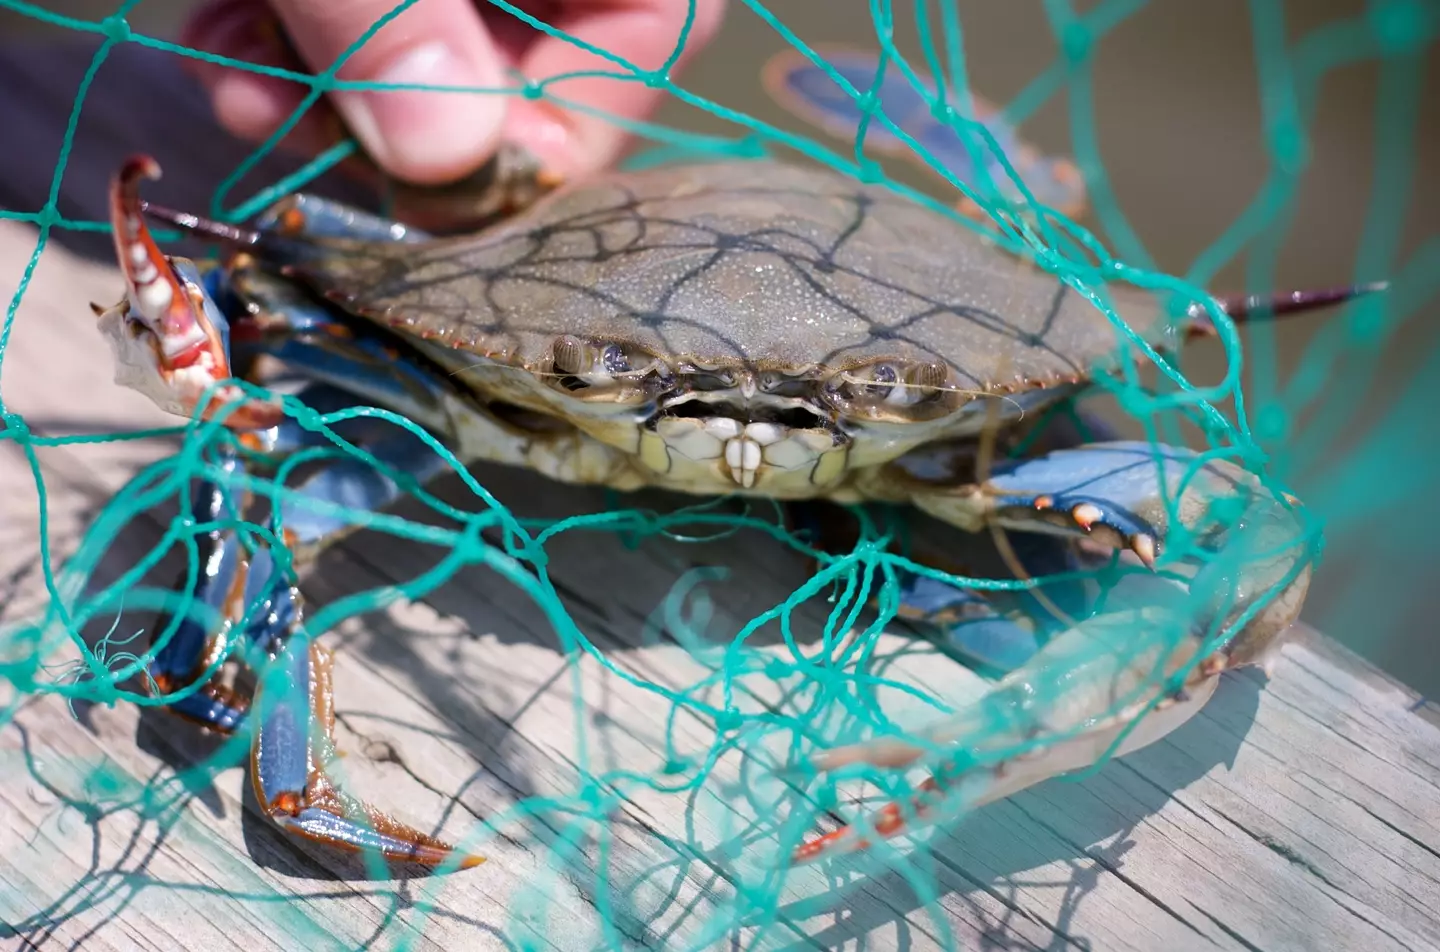 Blue crabs often snip their way through fishing nets and pinch fishermen.